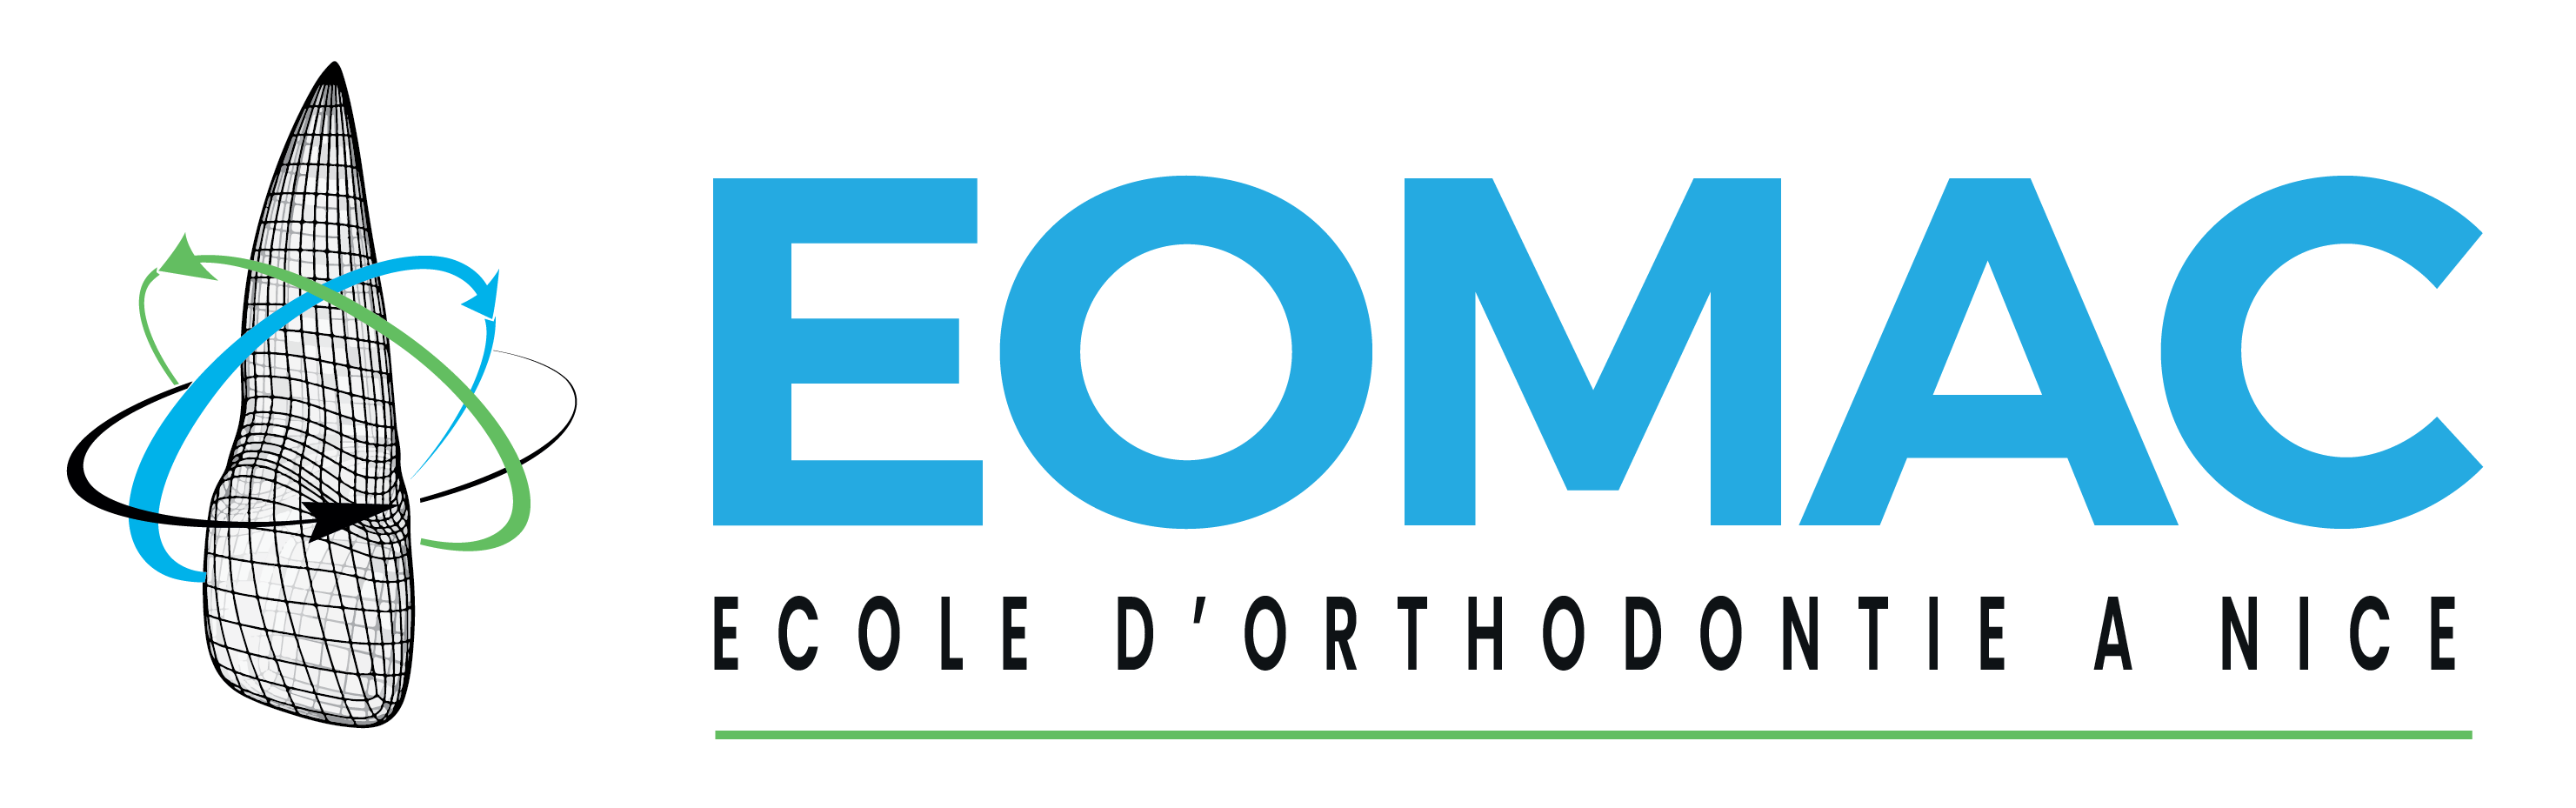 EOMAC - École d'orthodontie à Nice - Formations orthodontiste